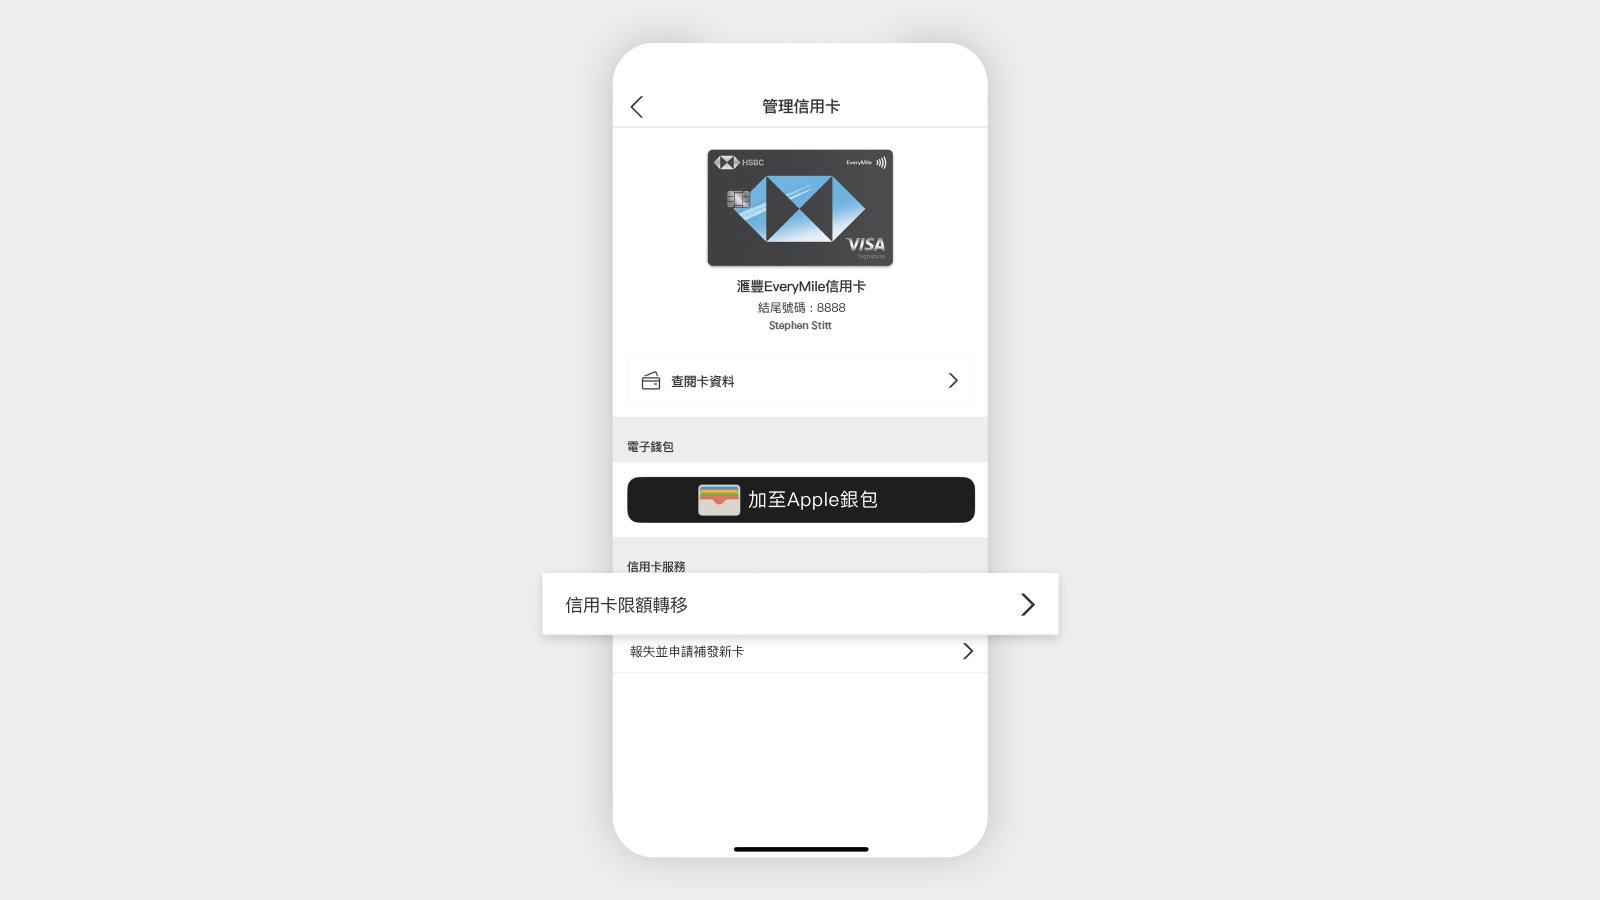 HSBC HK App 屏幕，顯示「信用卡限額轉移」選項。